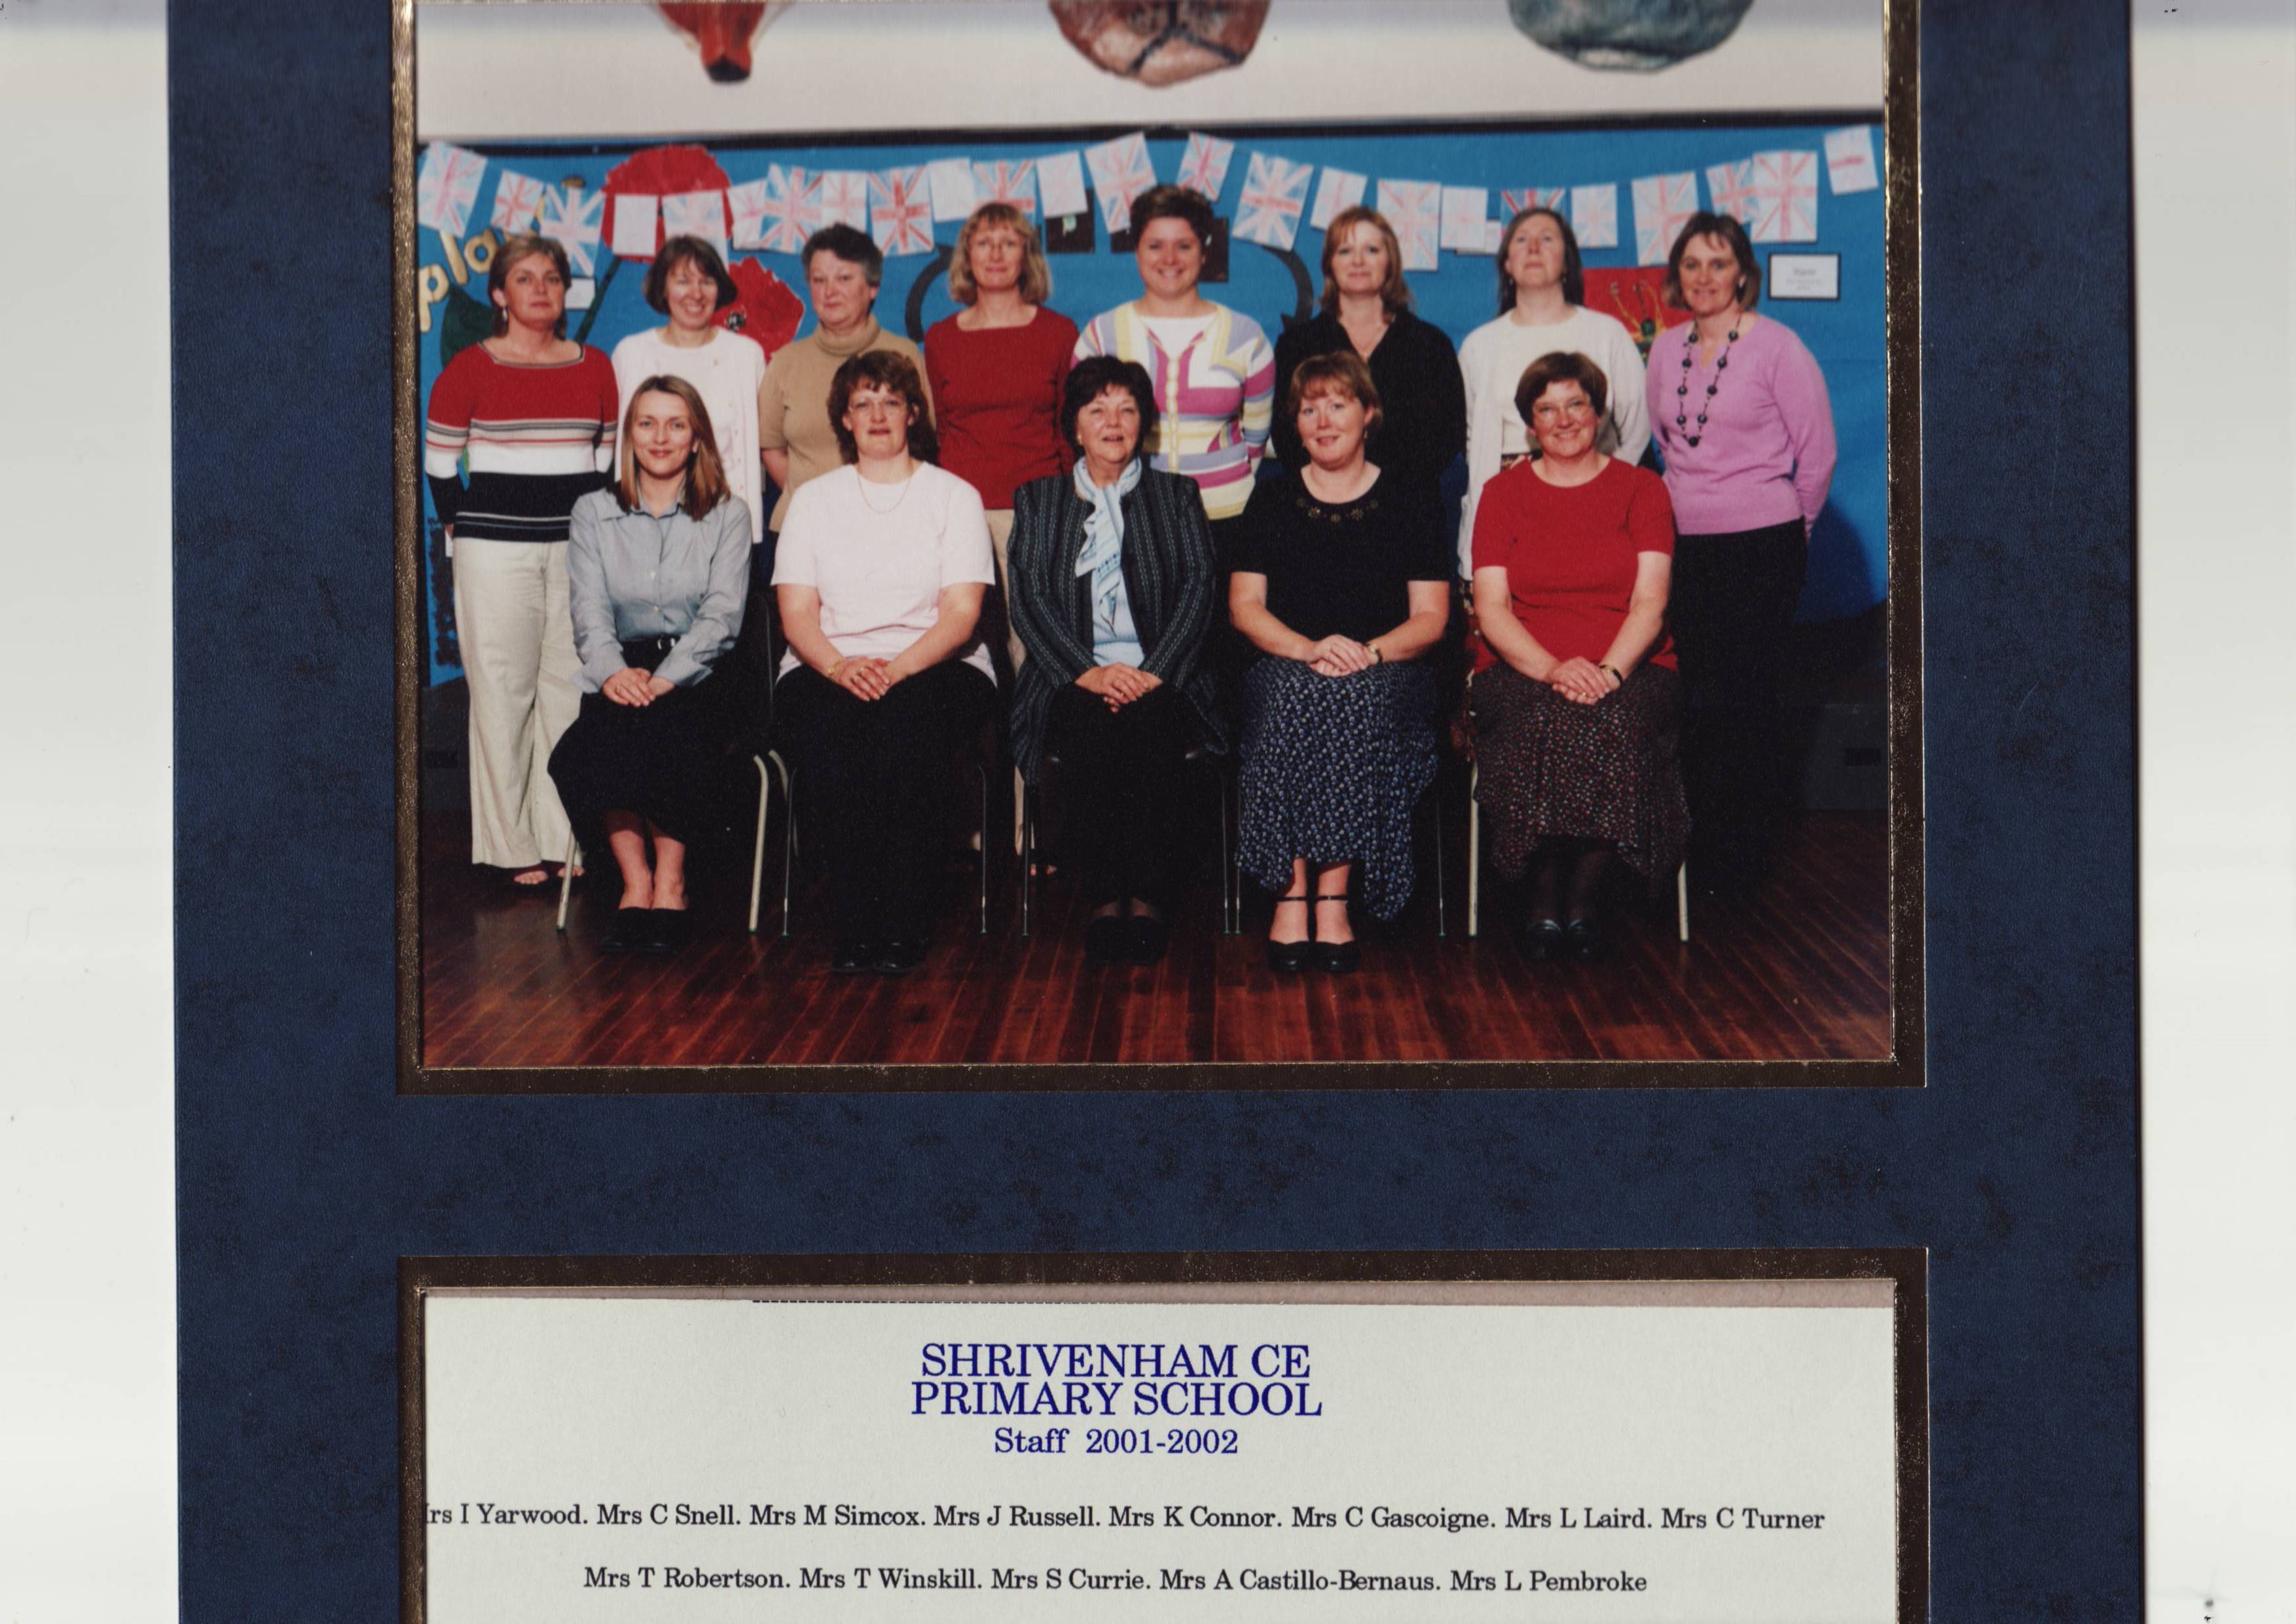 School staff of 2001 - 2